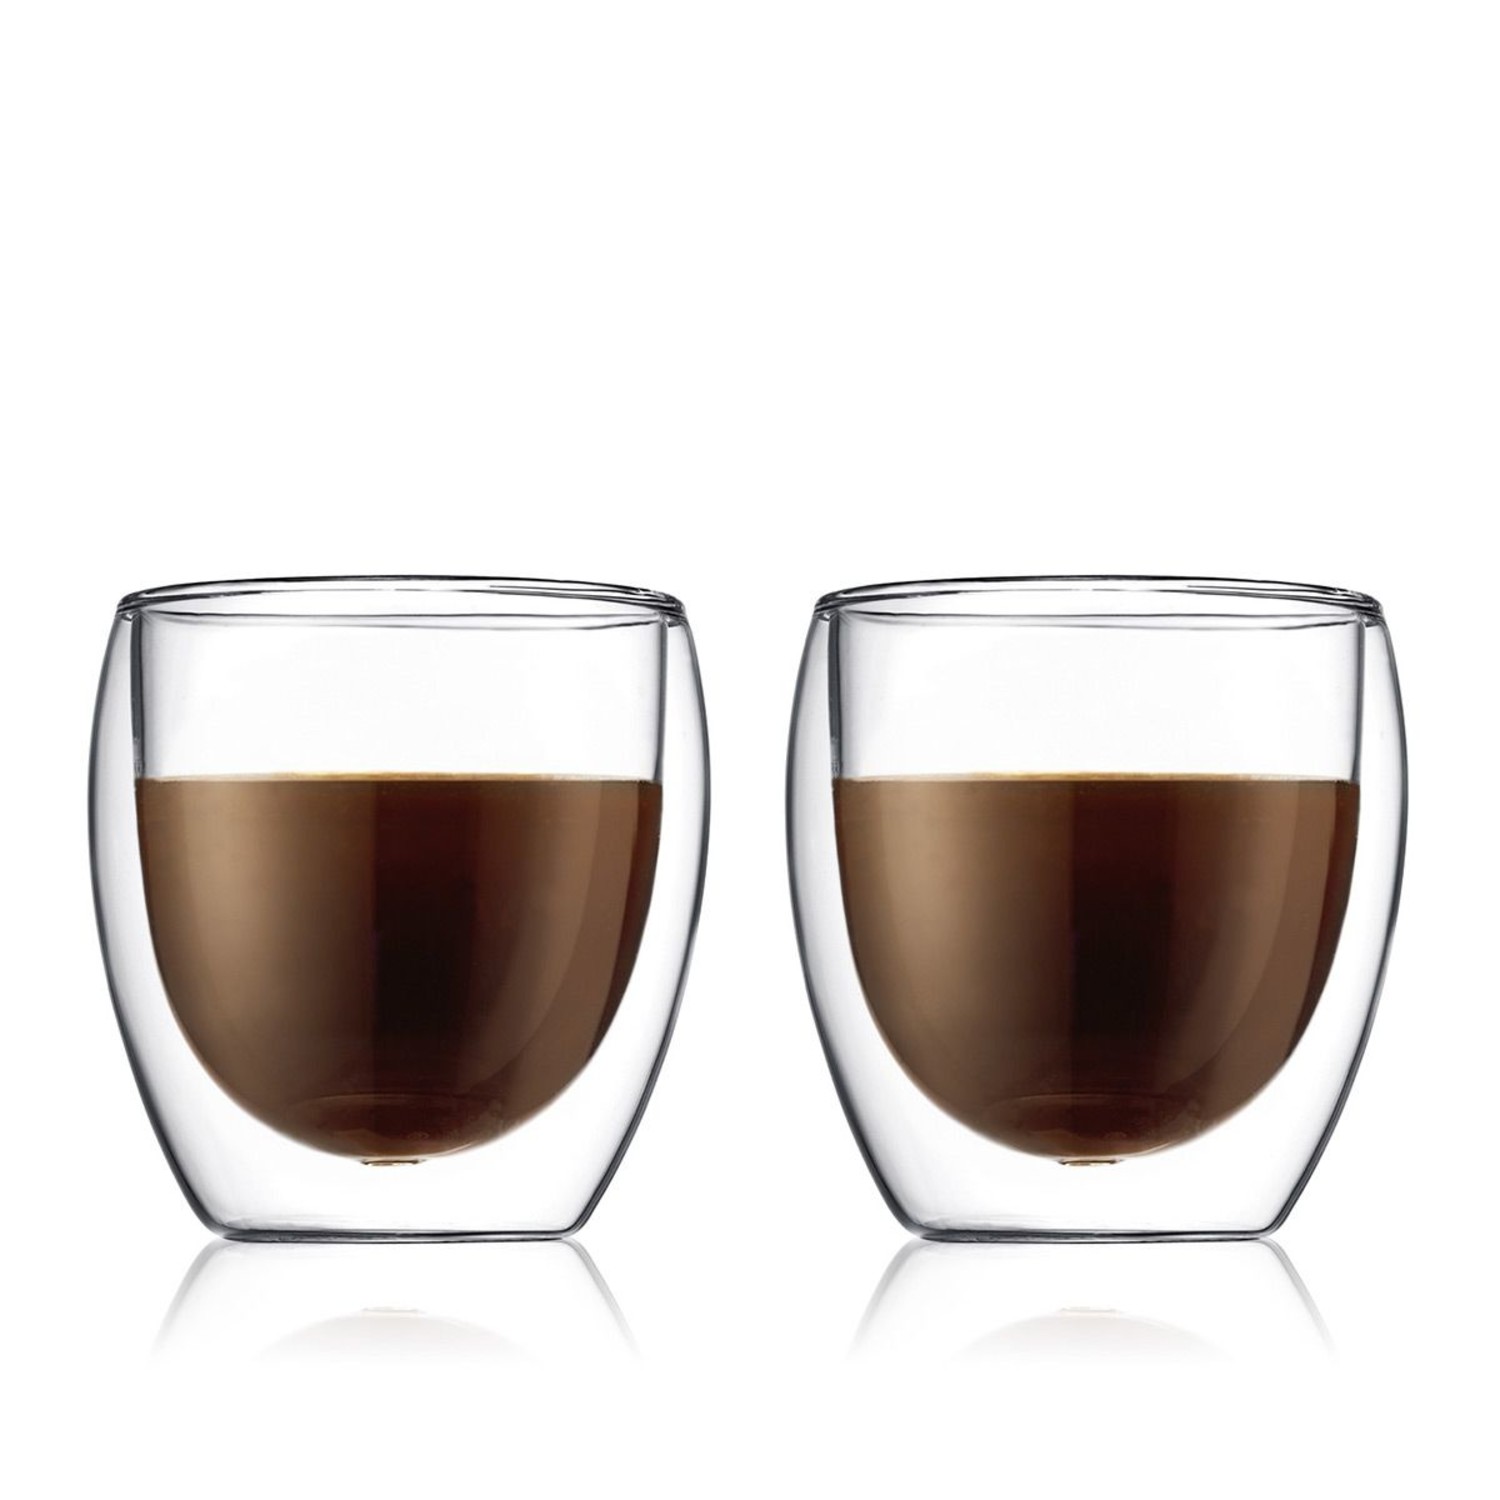 Bodum Bodum Espresso Double Wall Glasses, set of 2